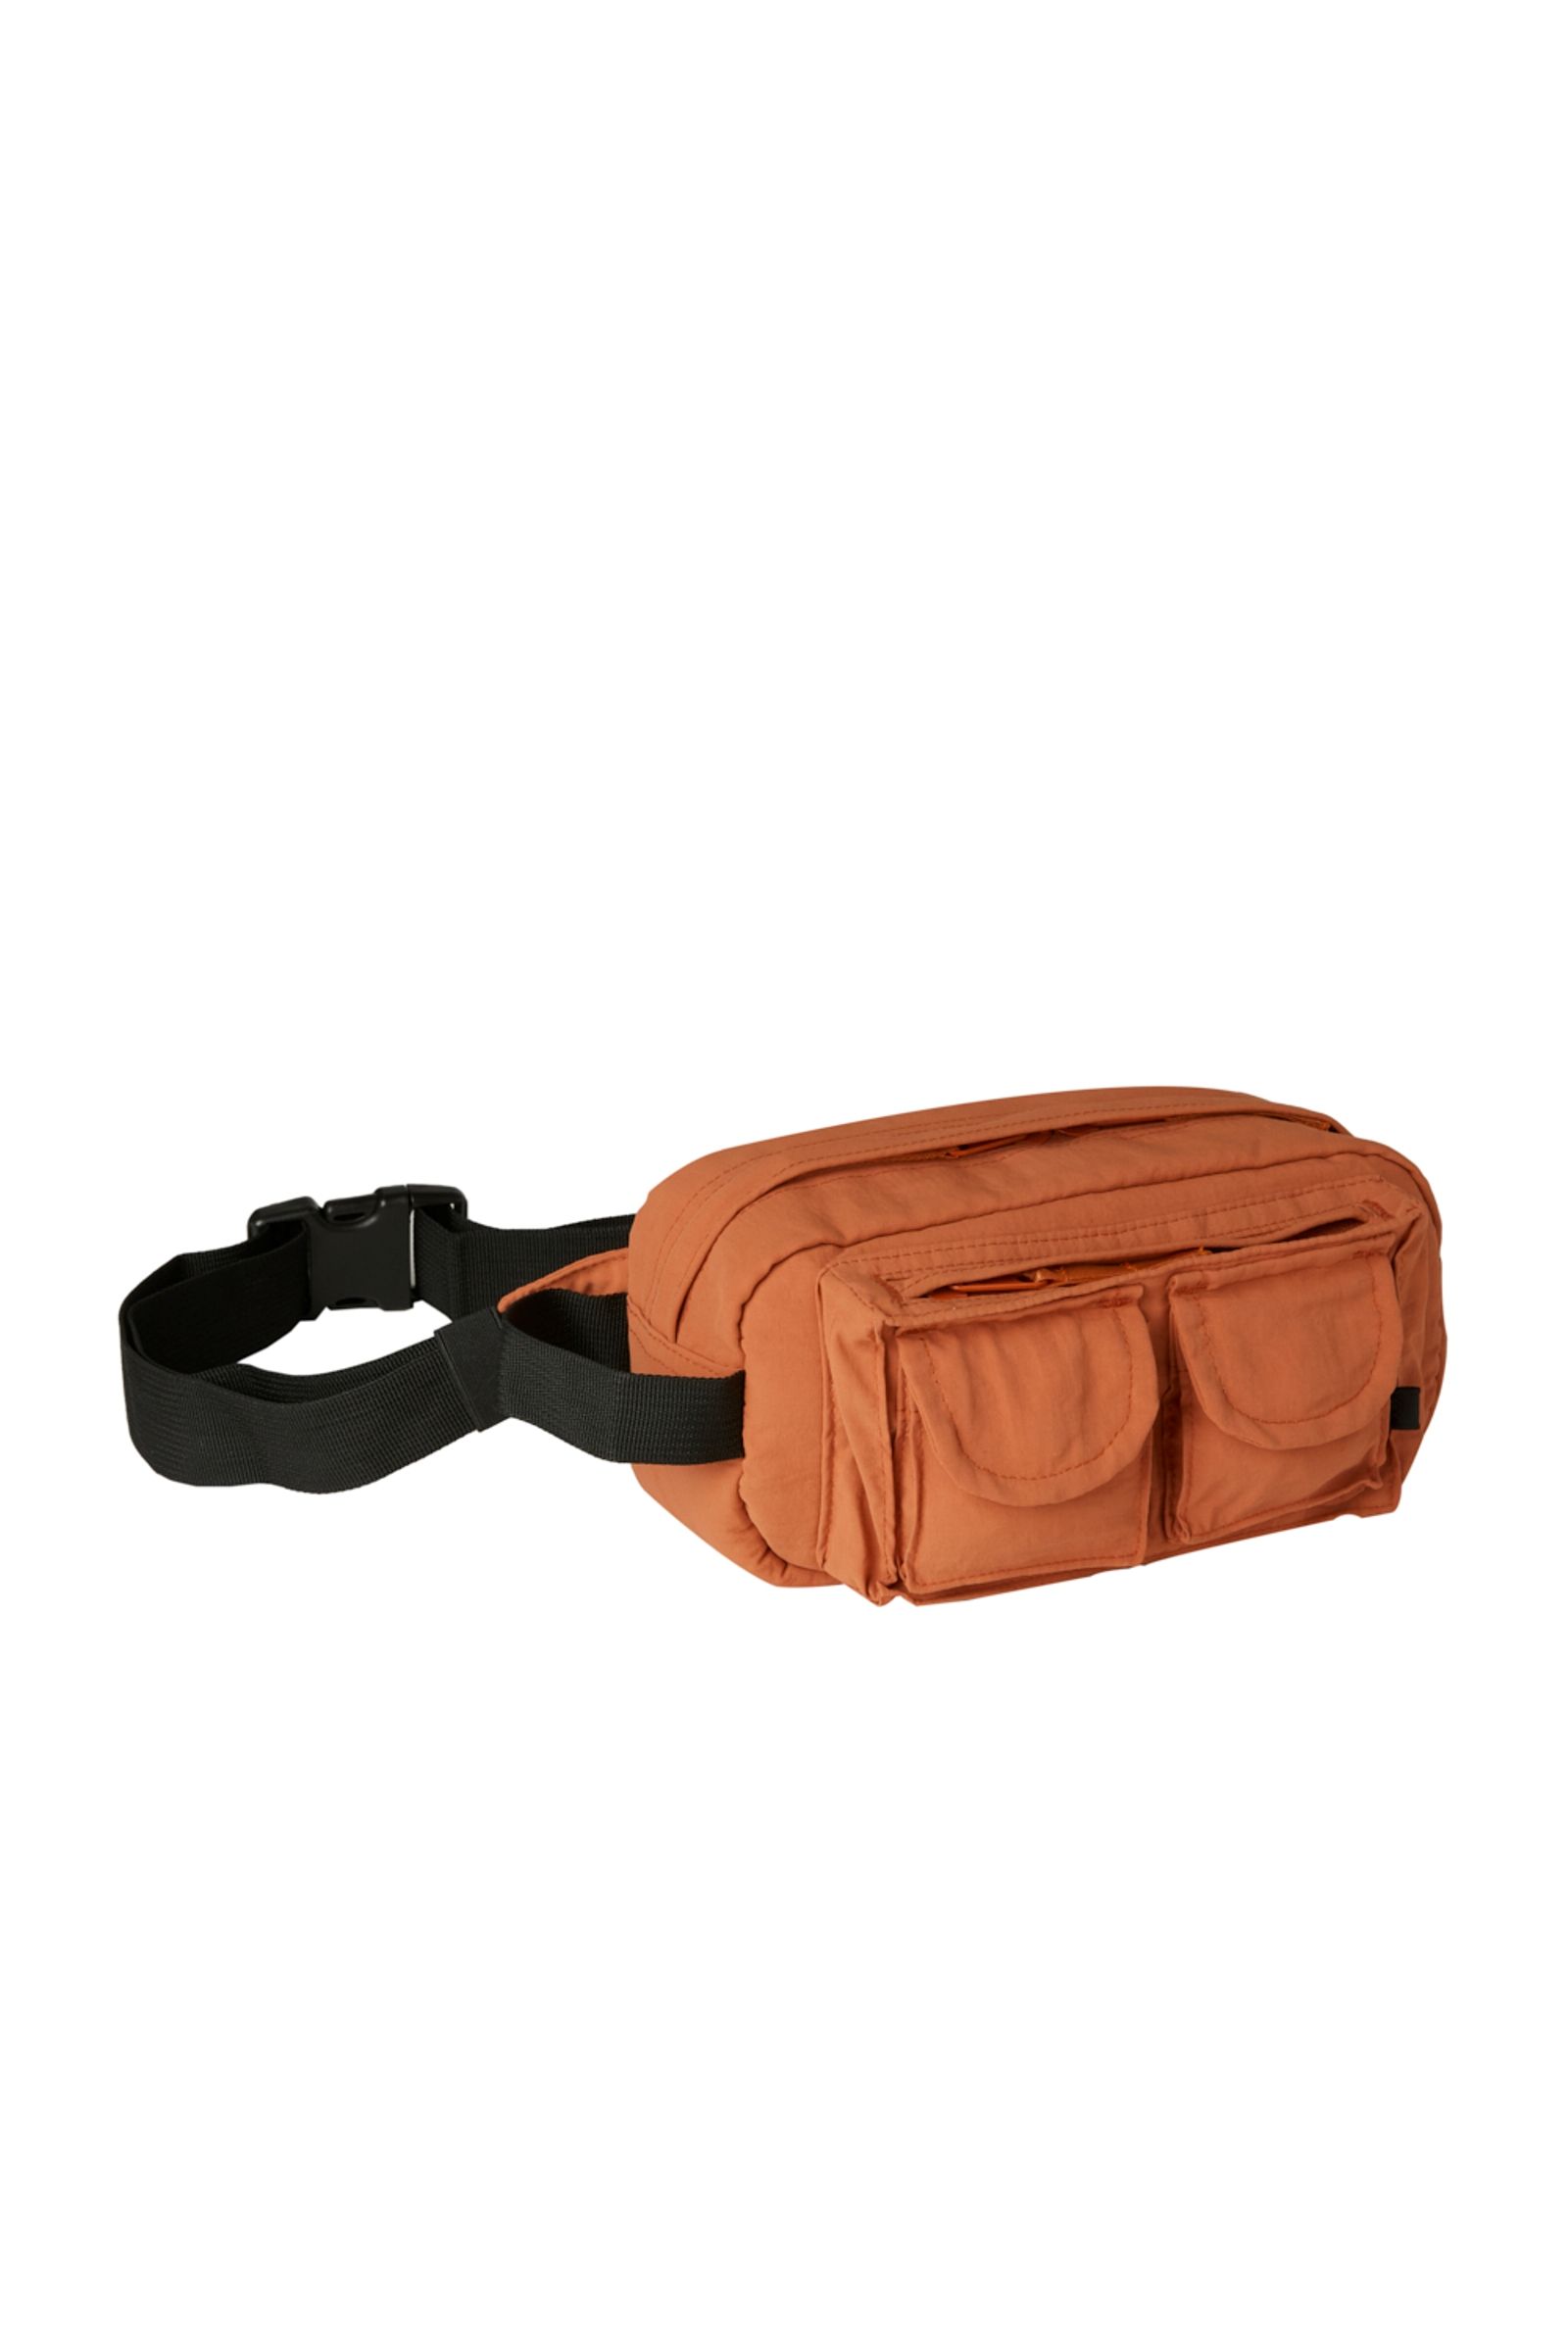 DAIWA PIER39 - tech perfect fishing tool pouch-orange-23ss unisex 